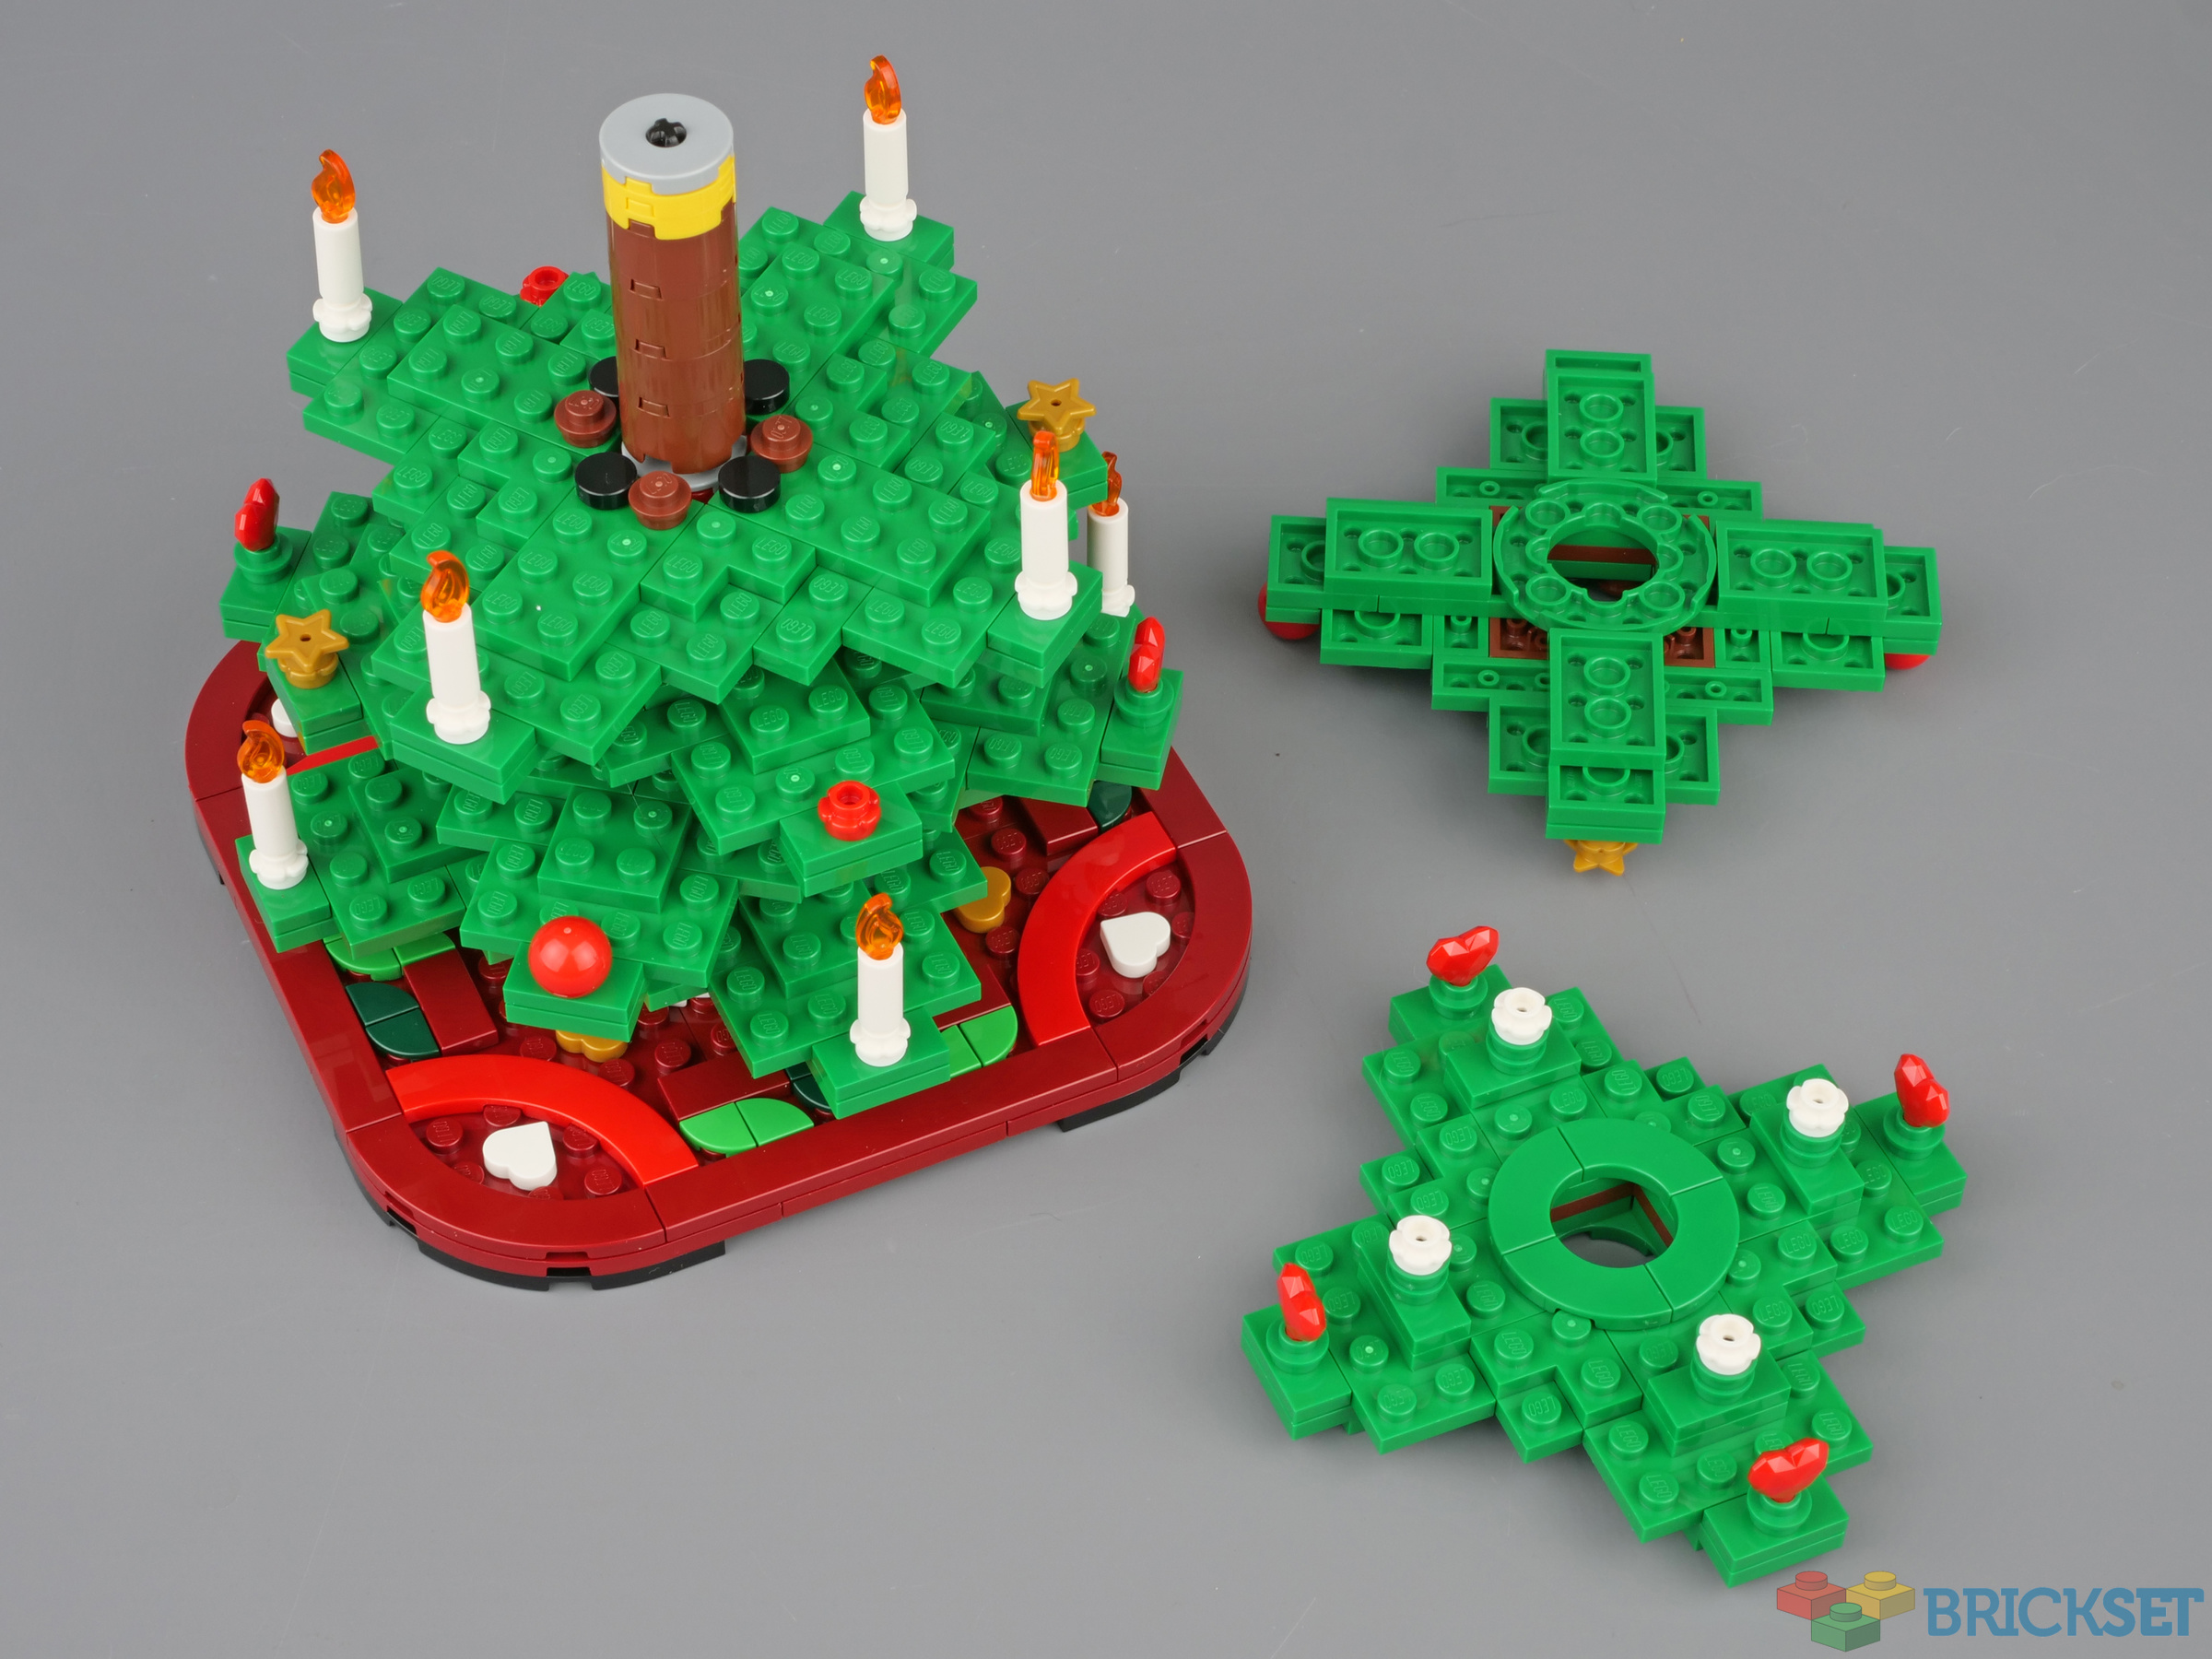 LEGO Christmas Tree Set Review 🎄 - Set #40573 